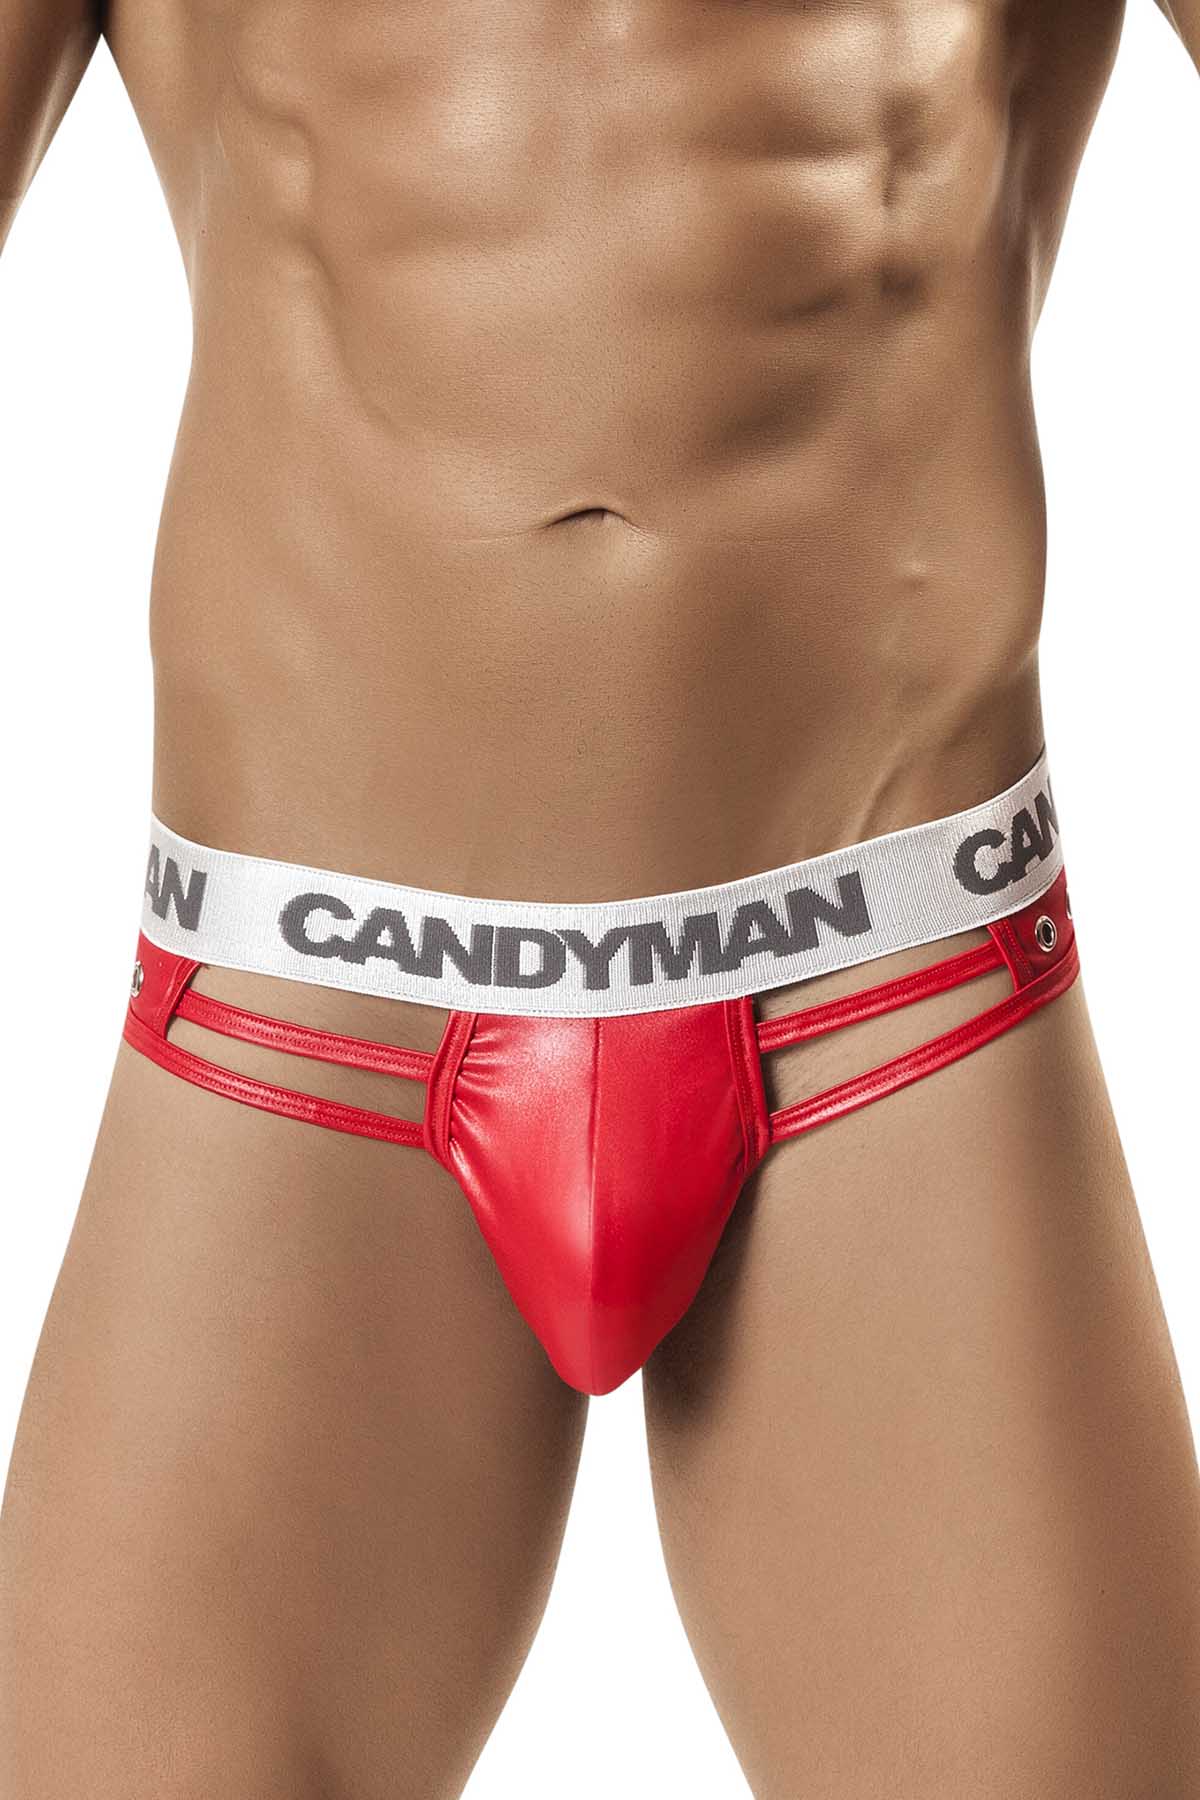 Candyman Red Shiny String Thong